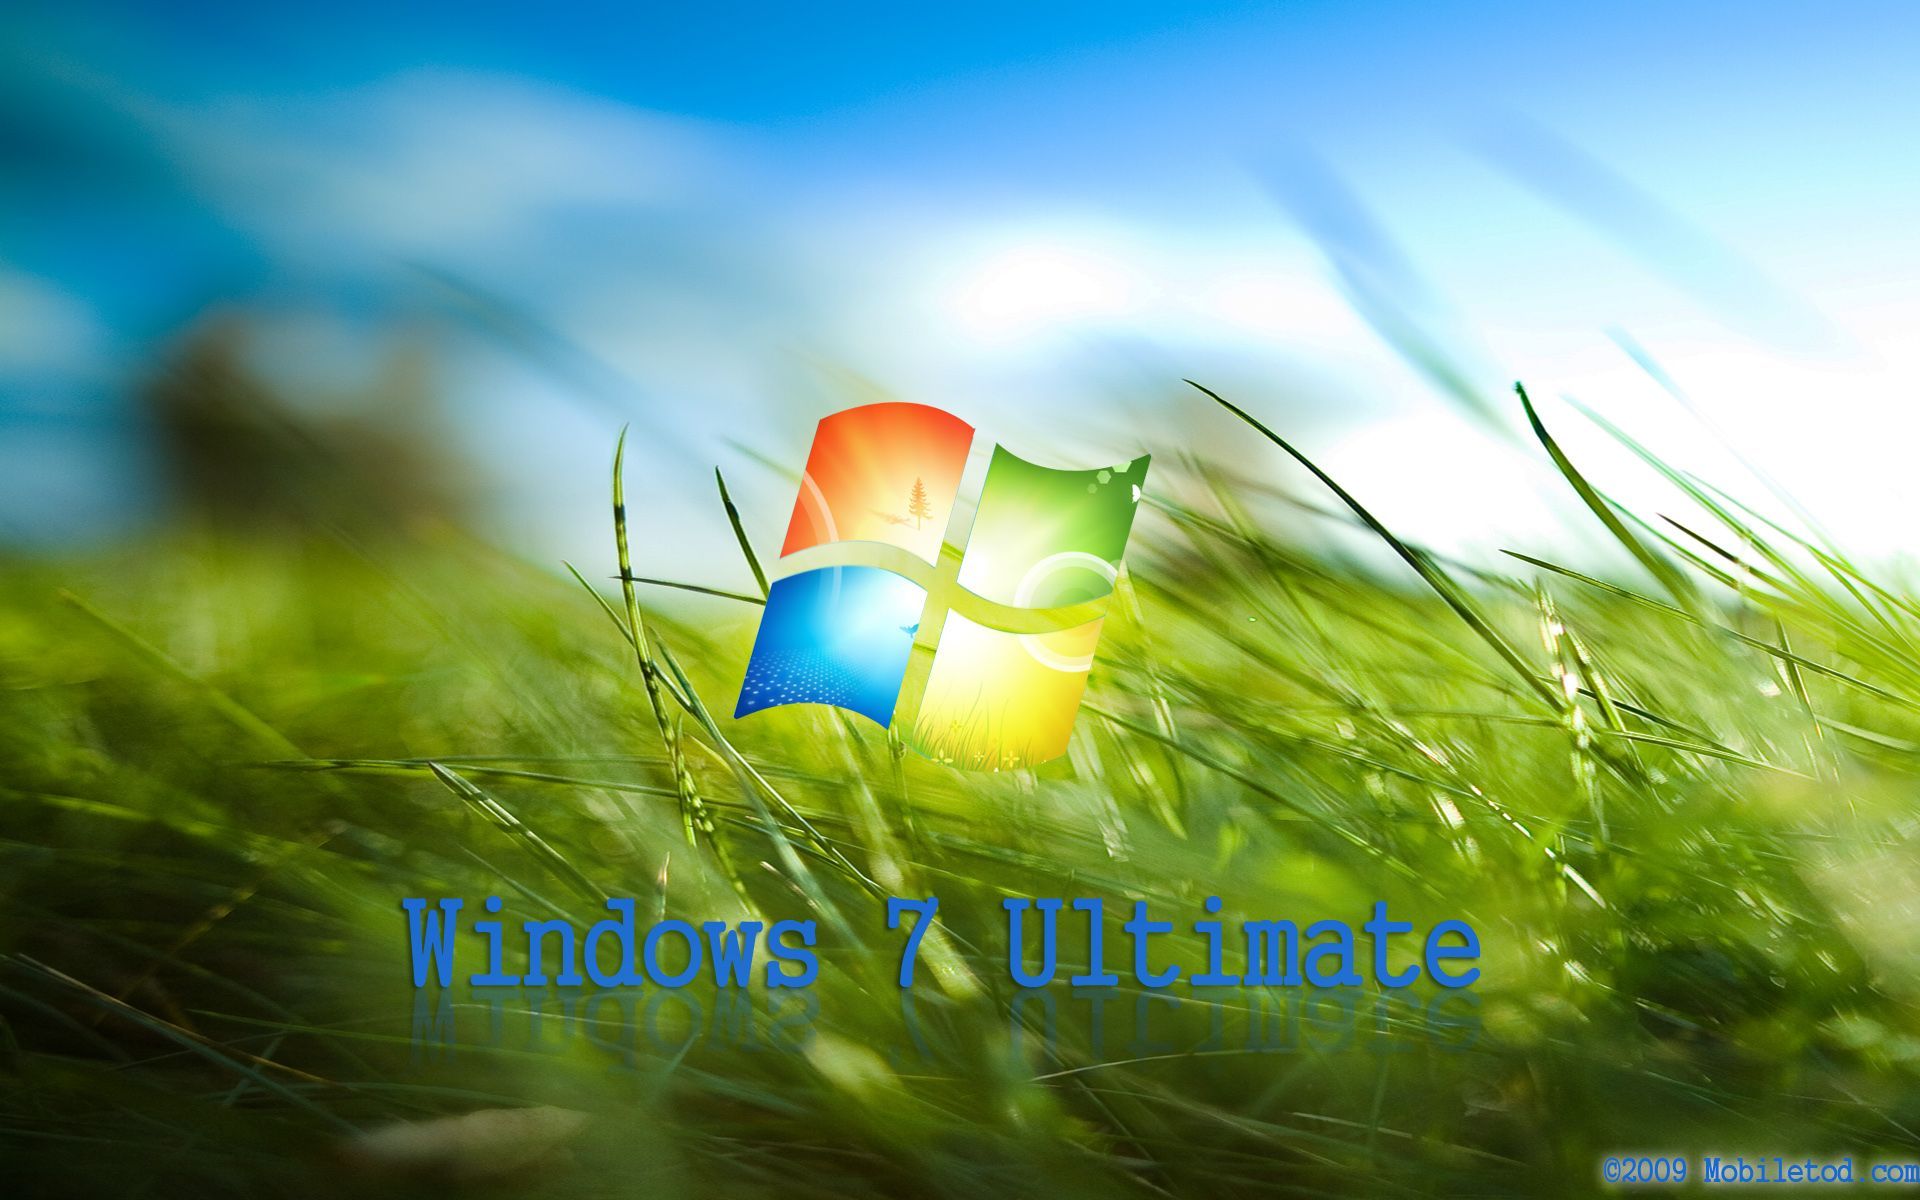 Windows 7 ultimate wallpaper free download